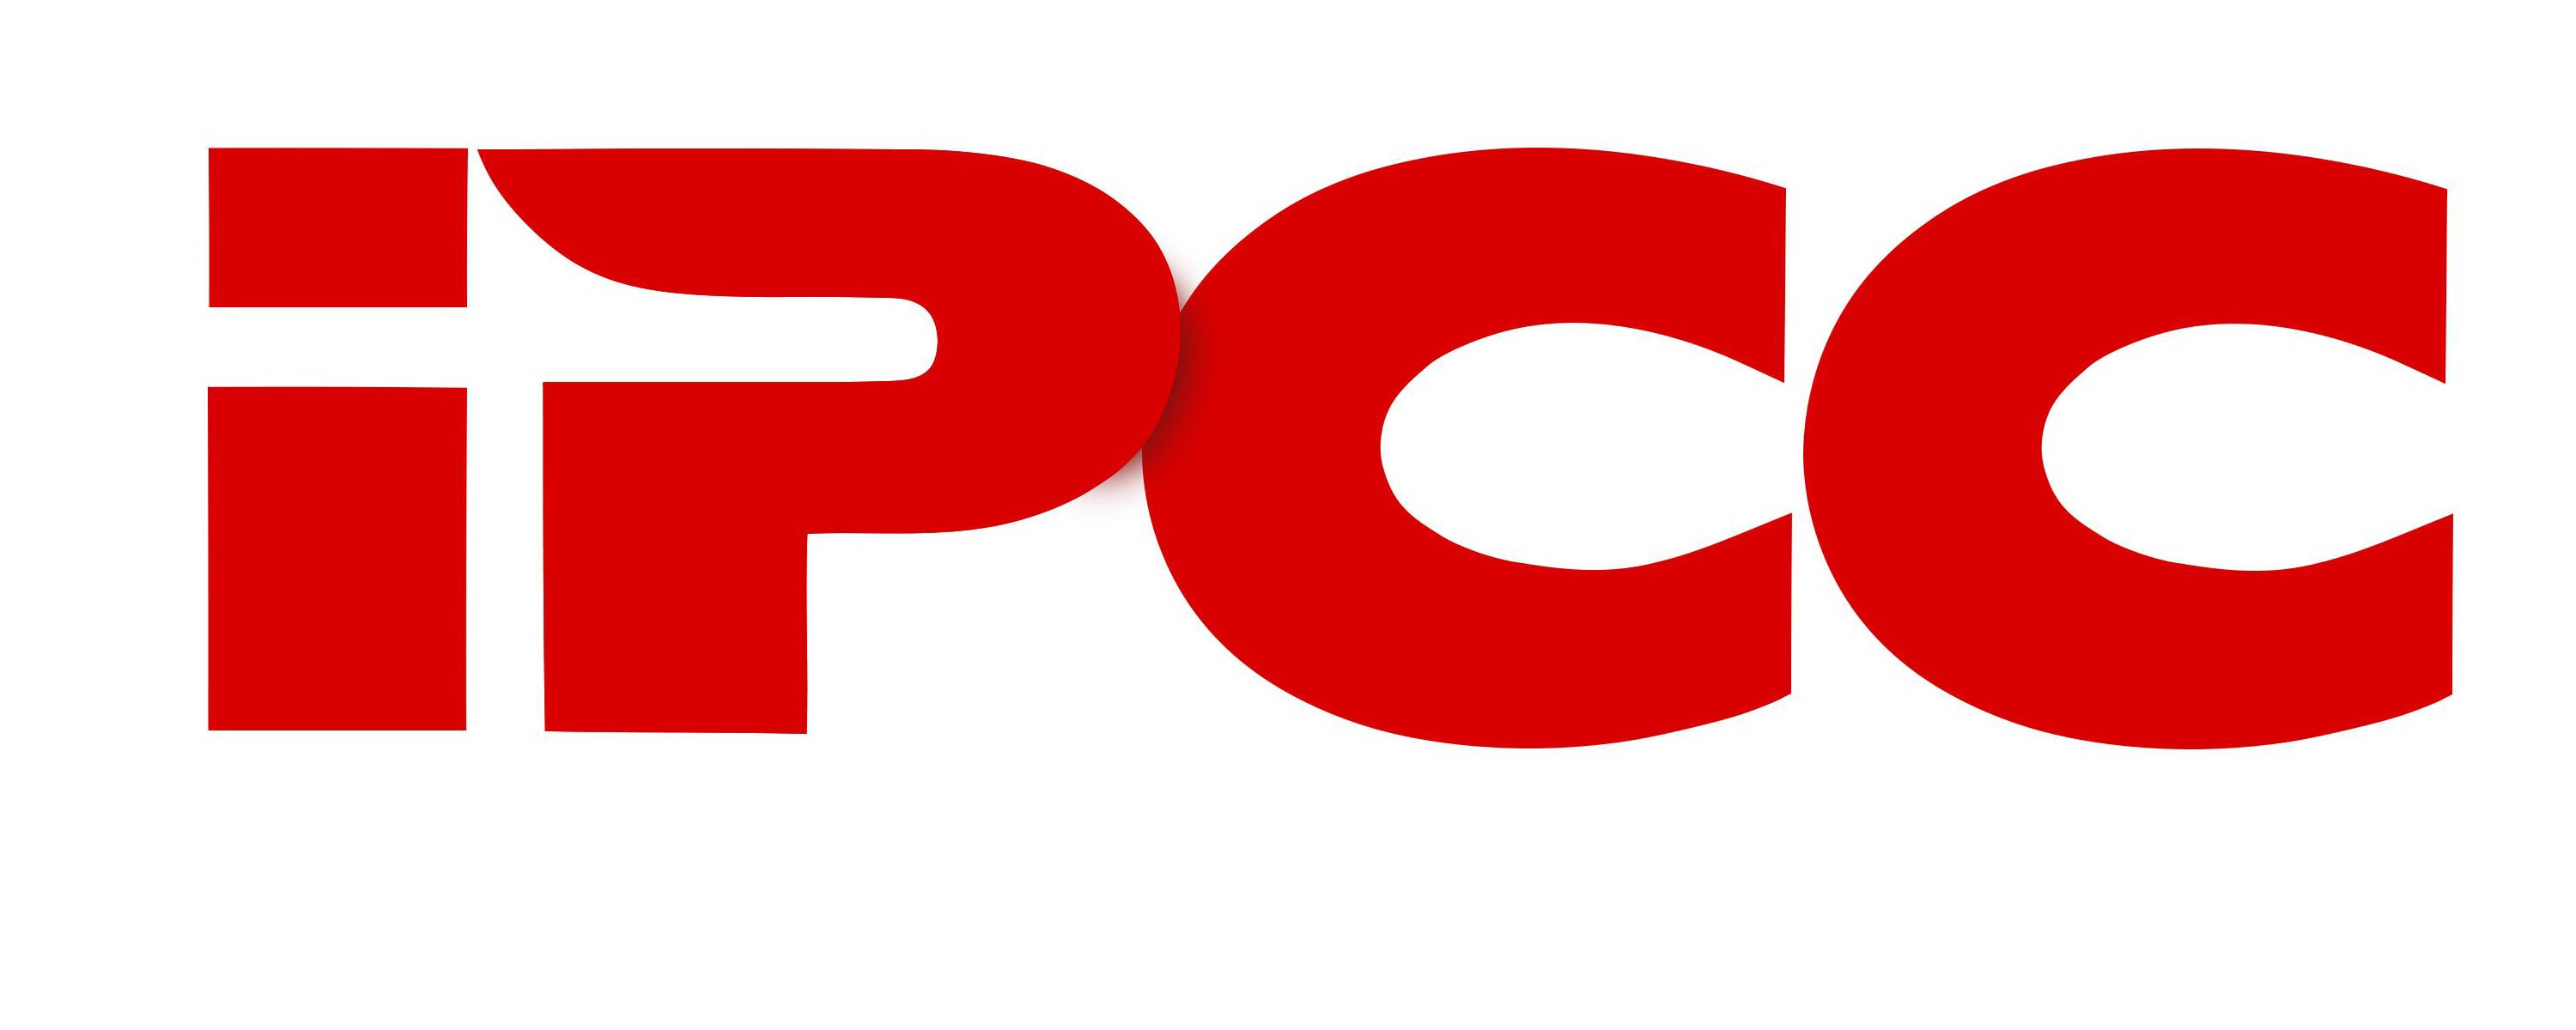 Trademark Logo IPCC